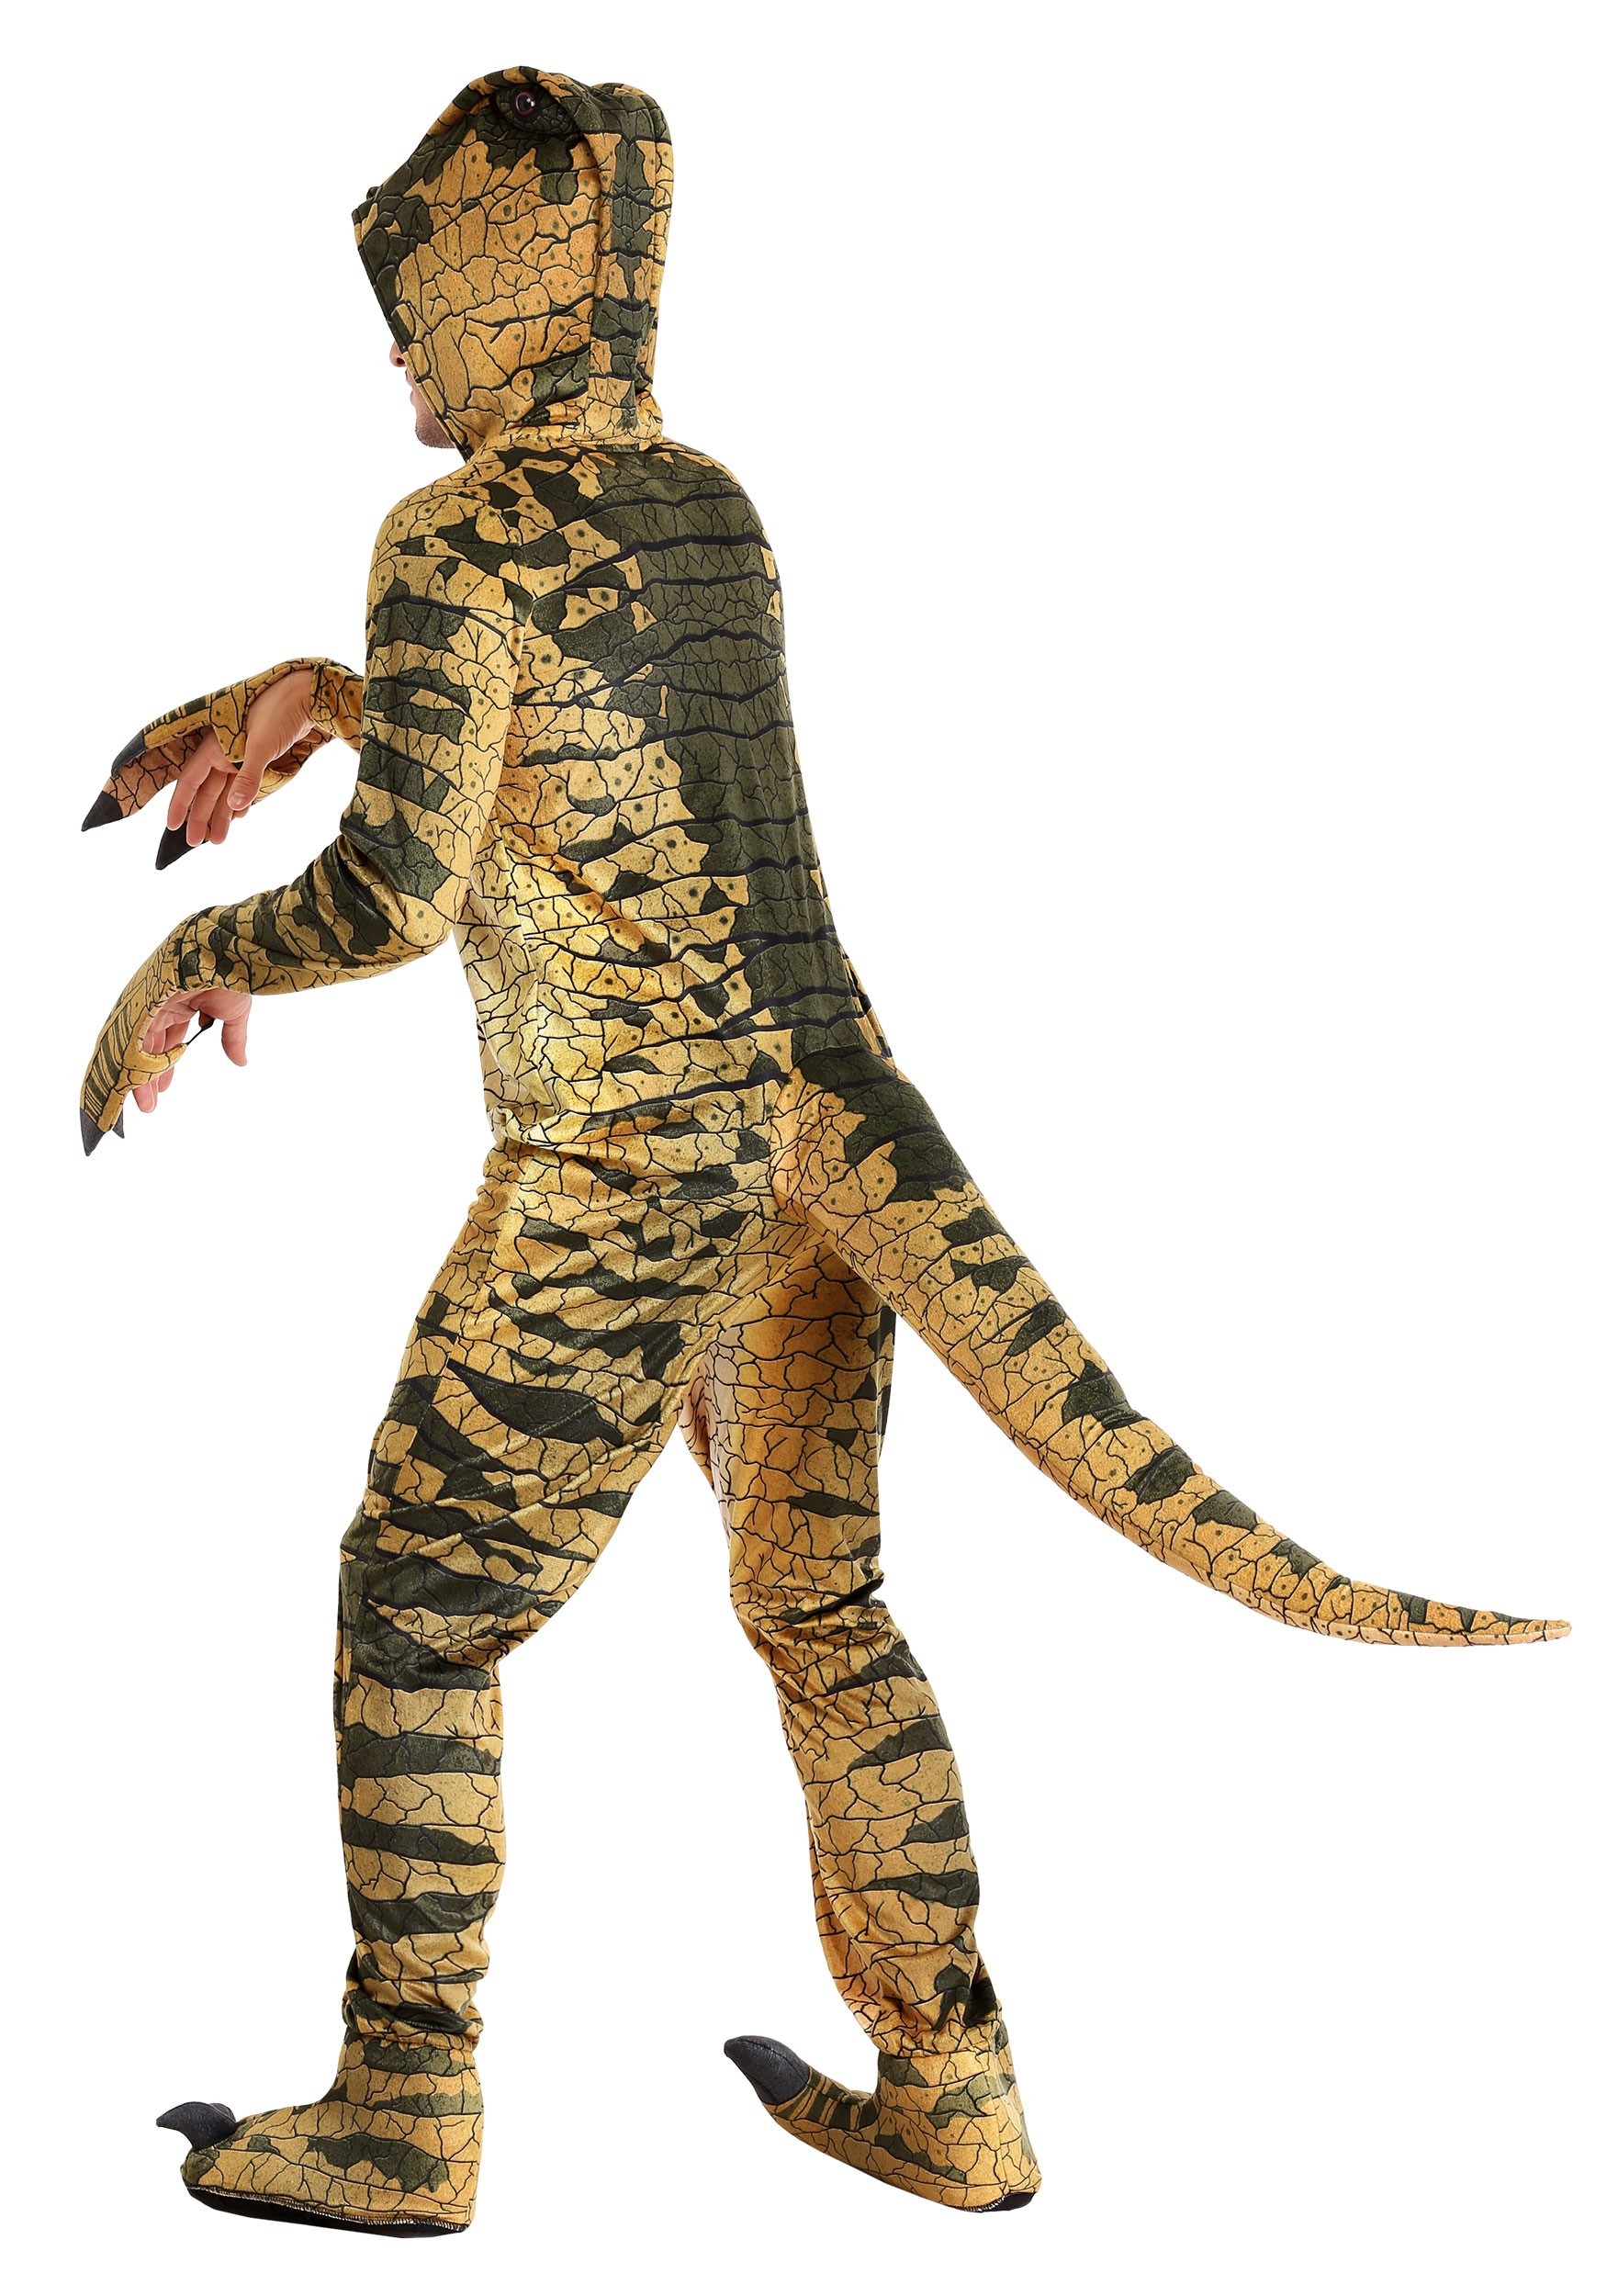 Men's Velociraptor Costume